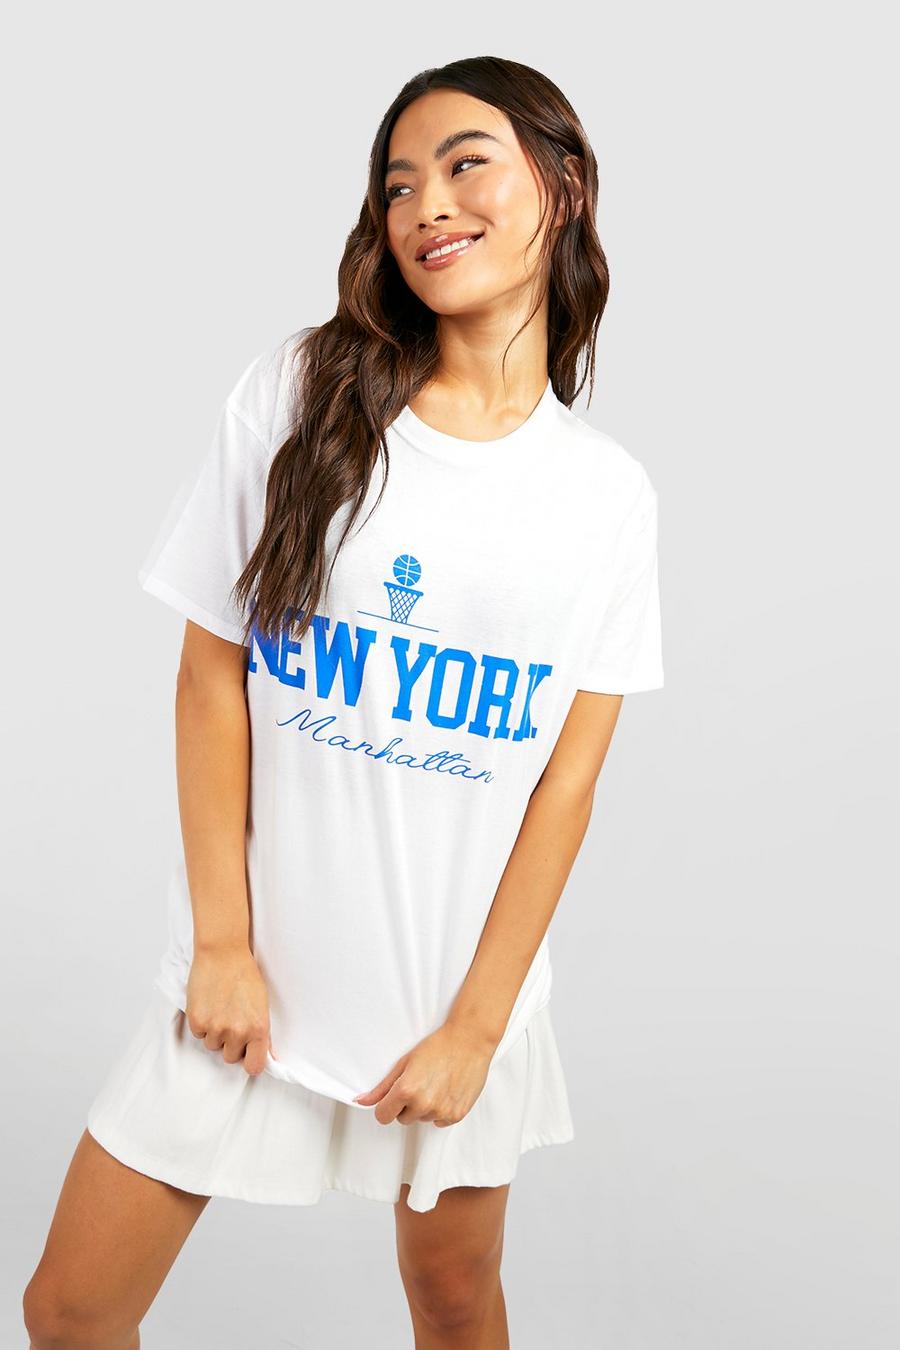 Woman Wearing Black New York Yankees Crew-neck Shirt and Black